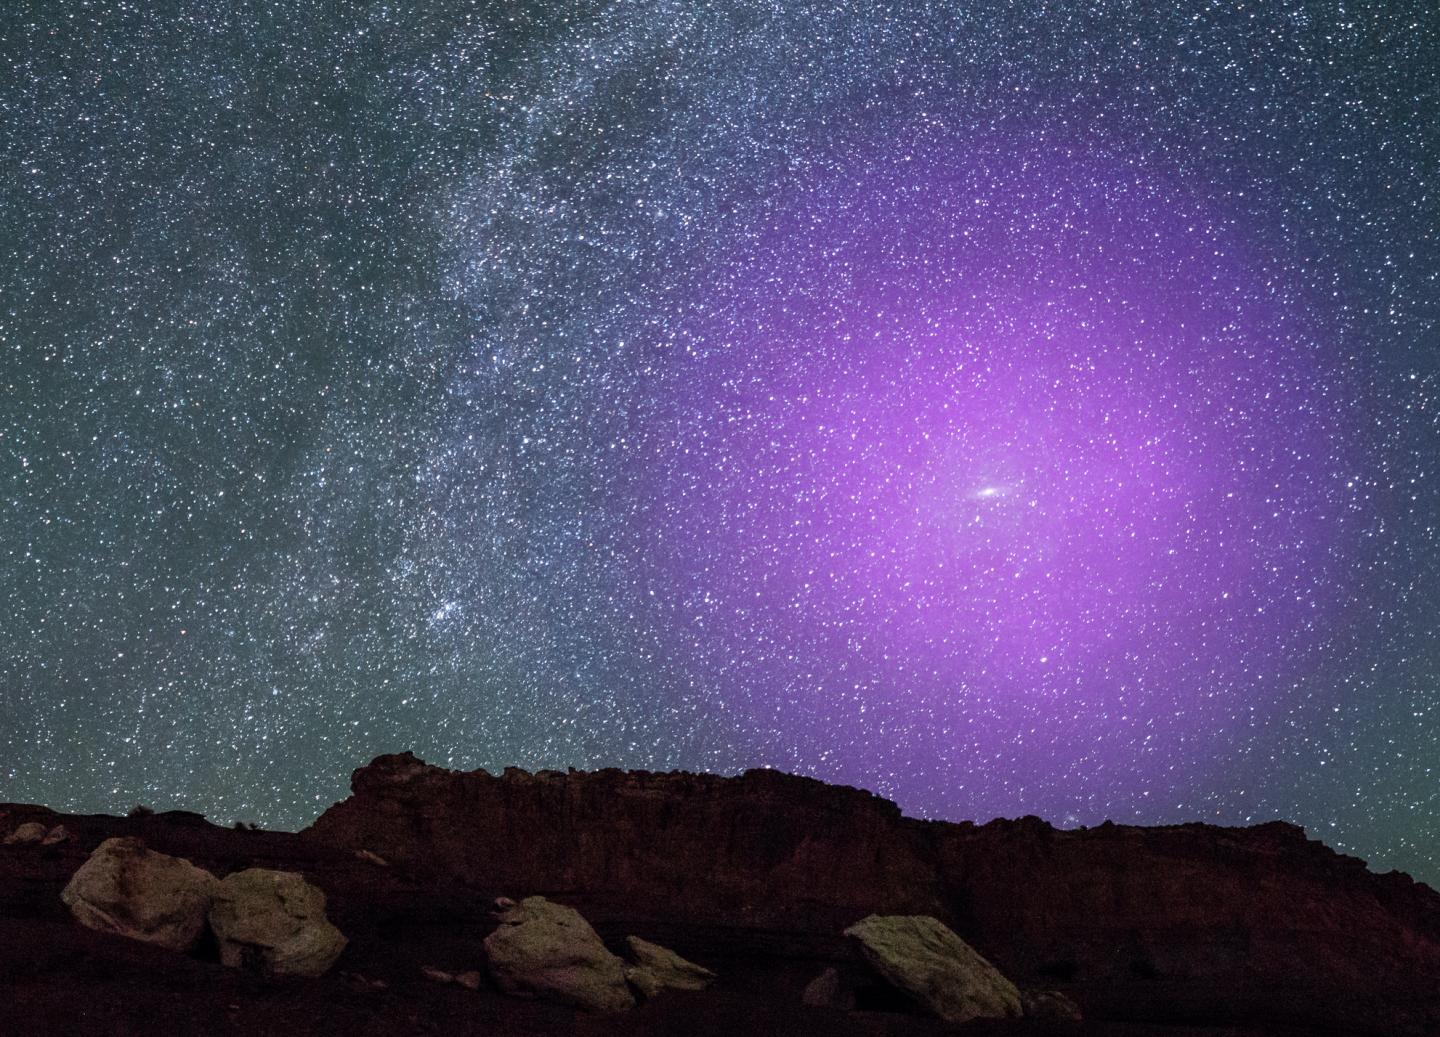 Andromeda's Halo